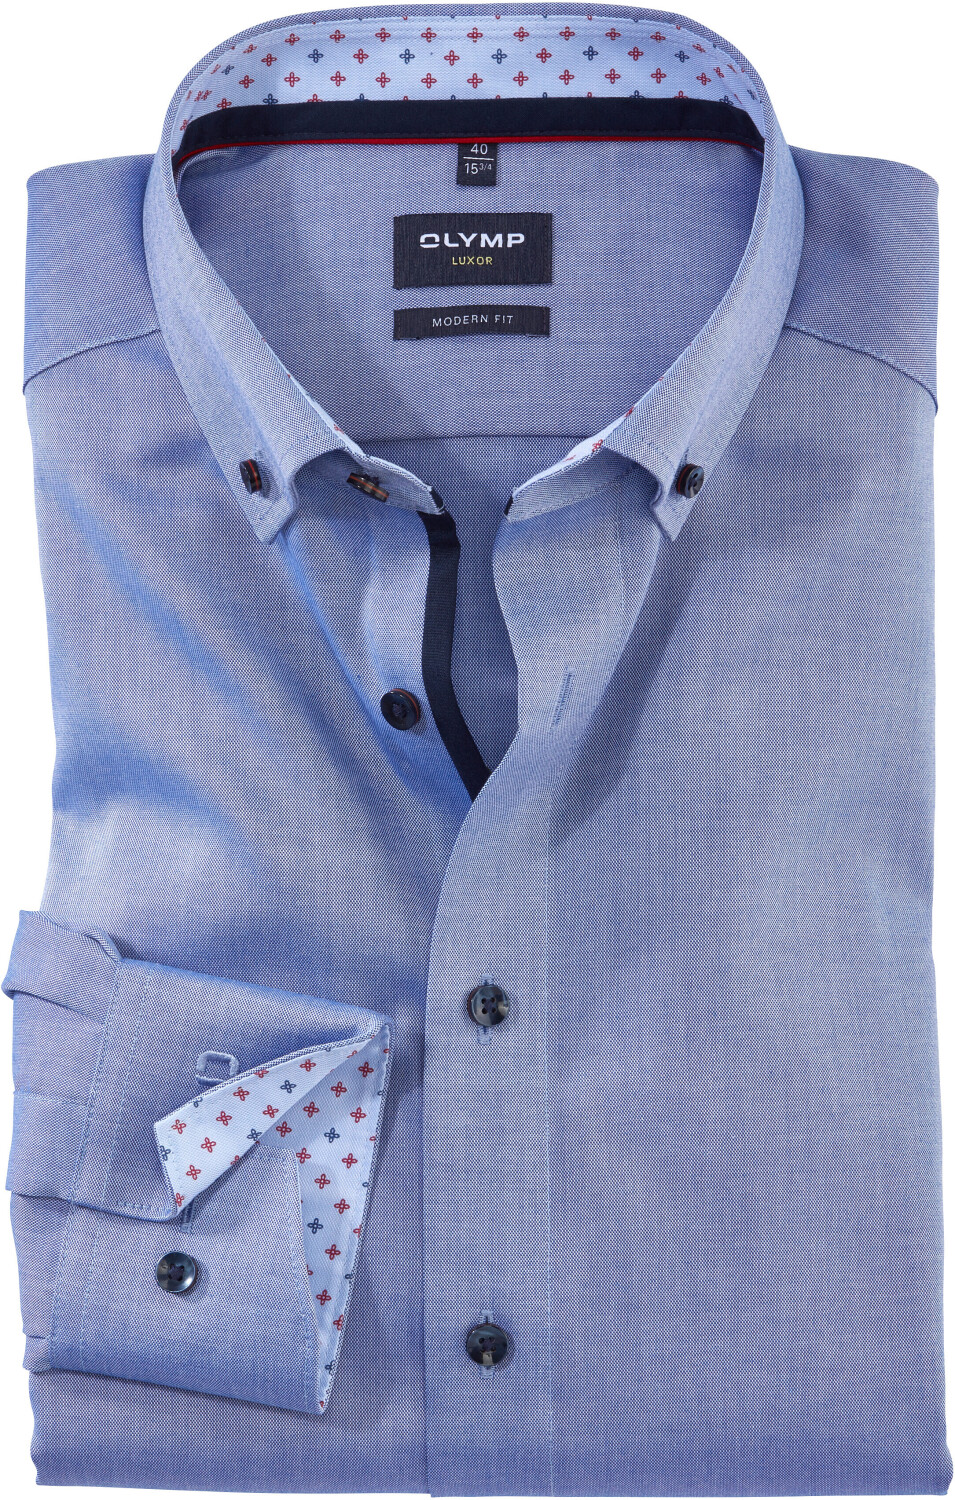 OLYMP Luxor Fit Button-Down Preisvergleich 67,85 | € blau bei ab Modern Hemd (1332-34-13)